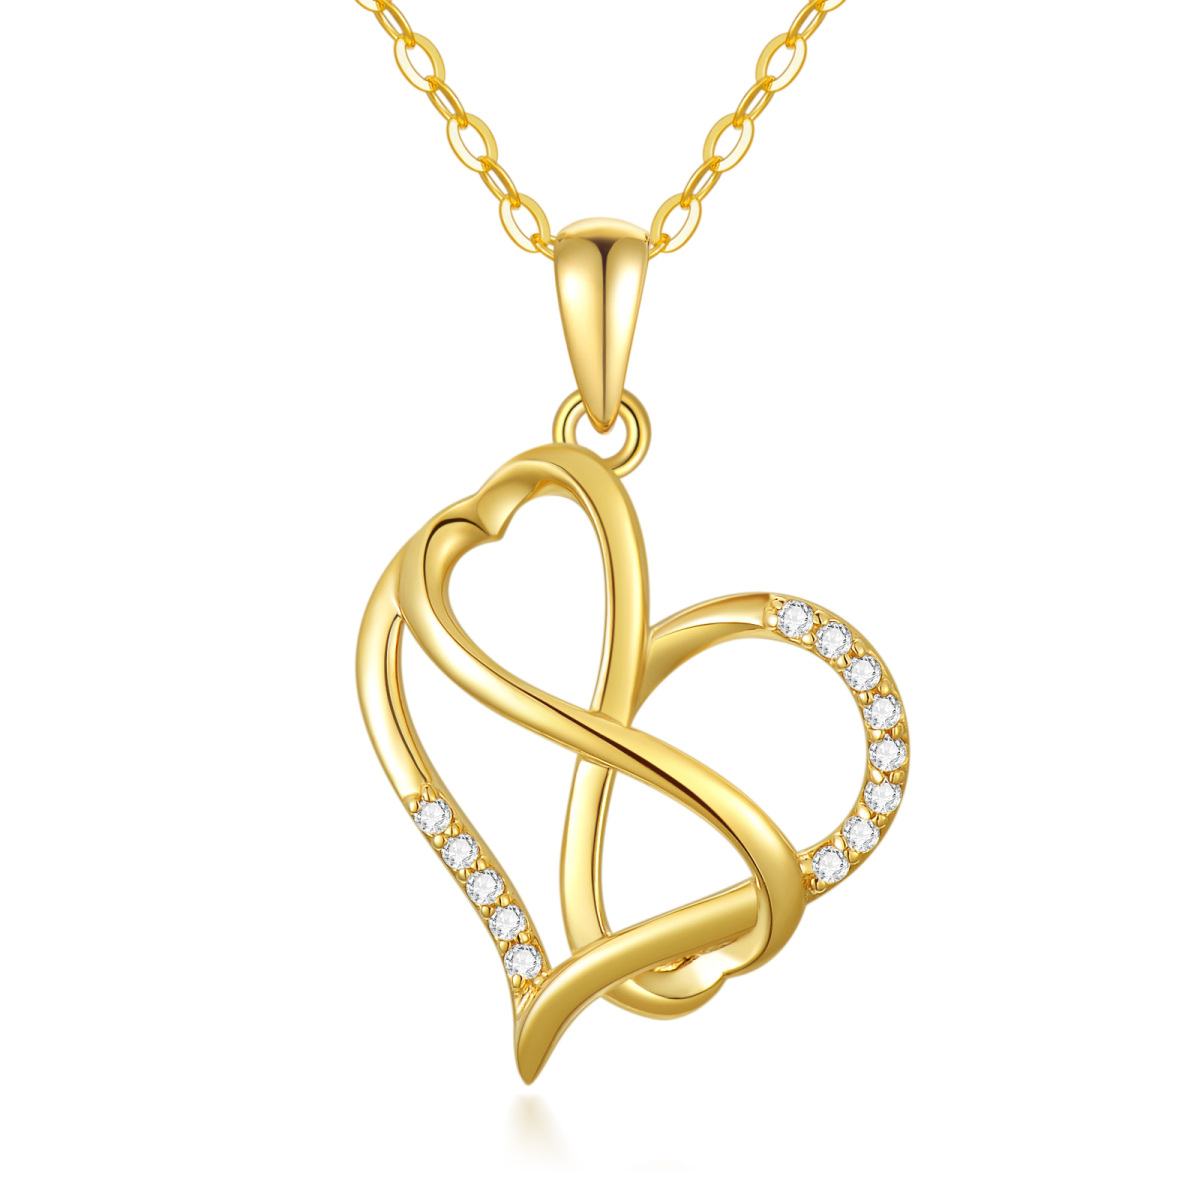 Collier en or 14K avec pendentif circulaire en zircon cubique en forme de coeur et symbole-1